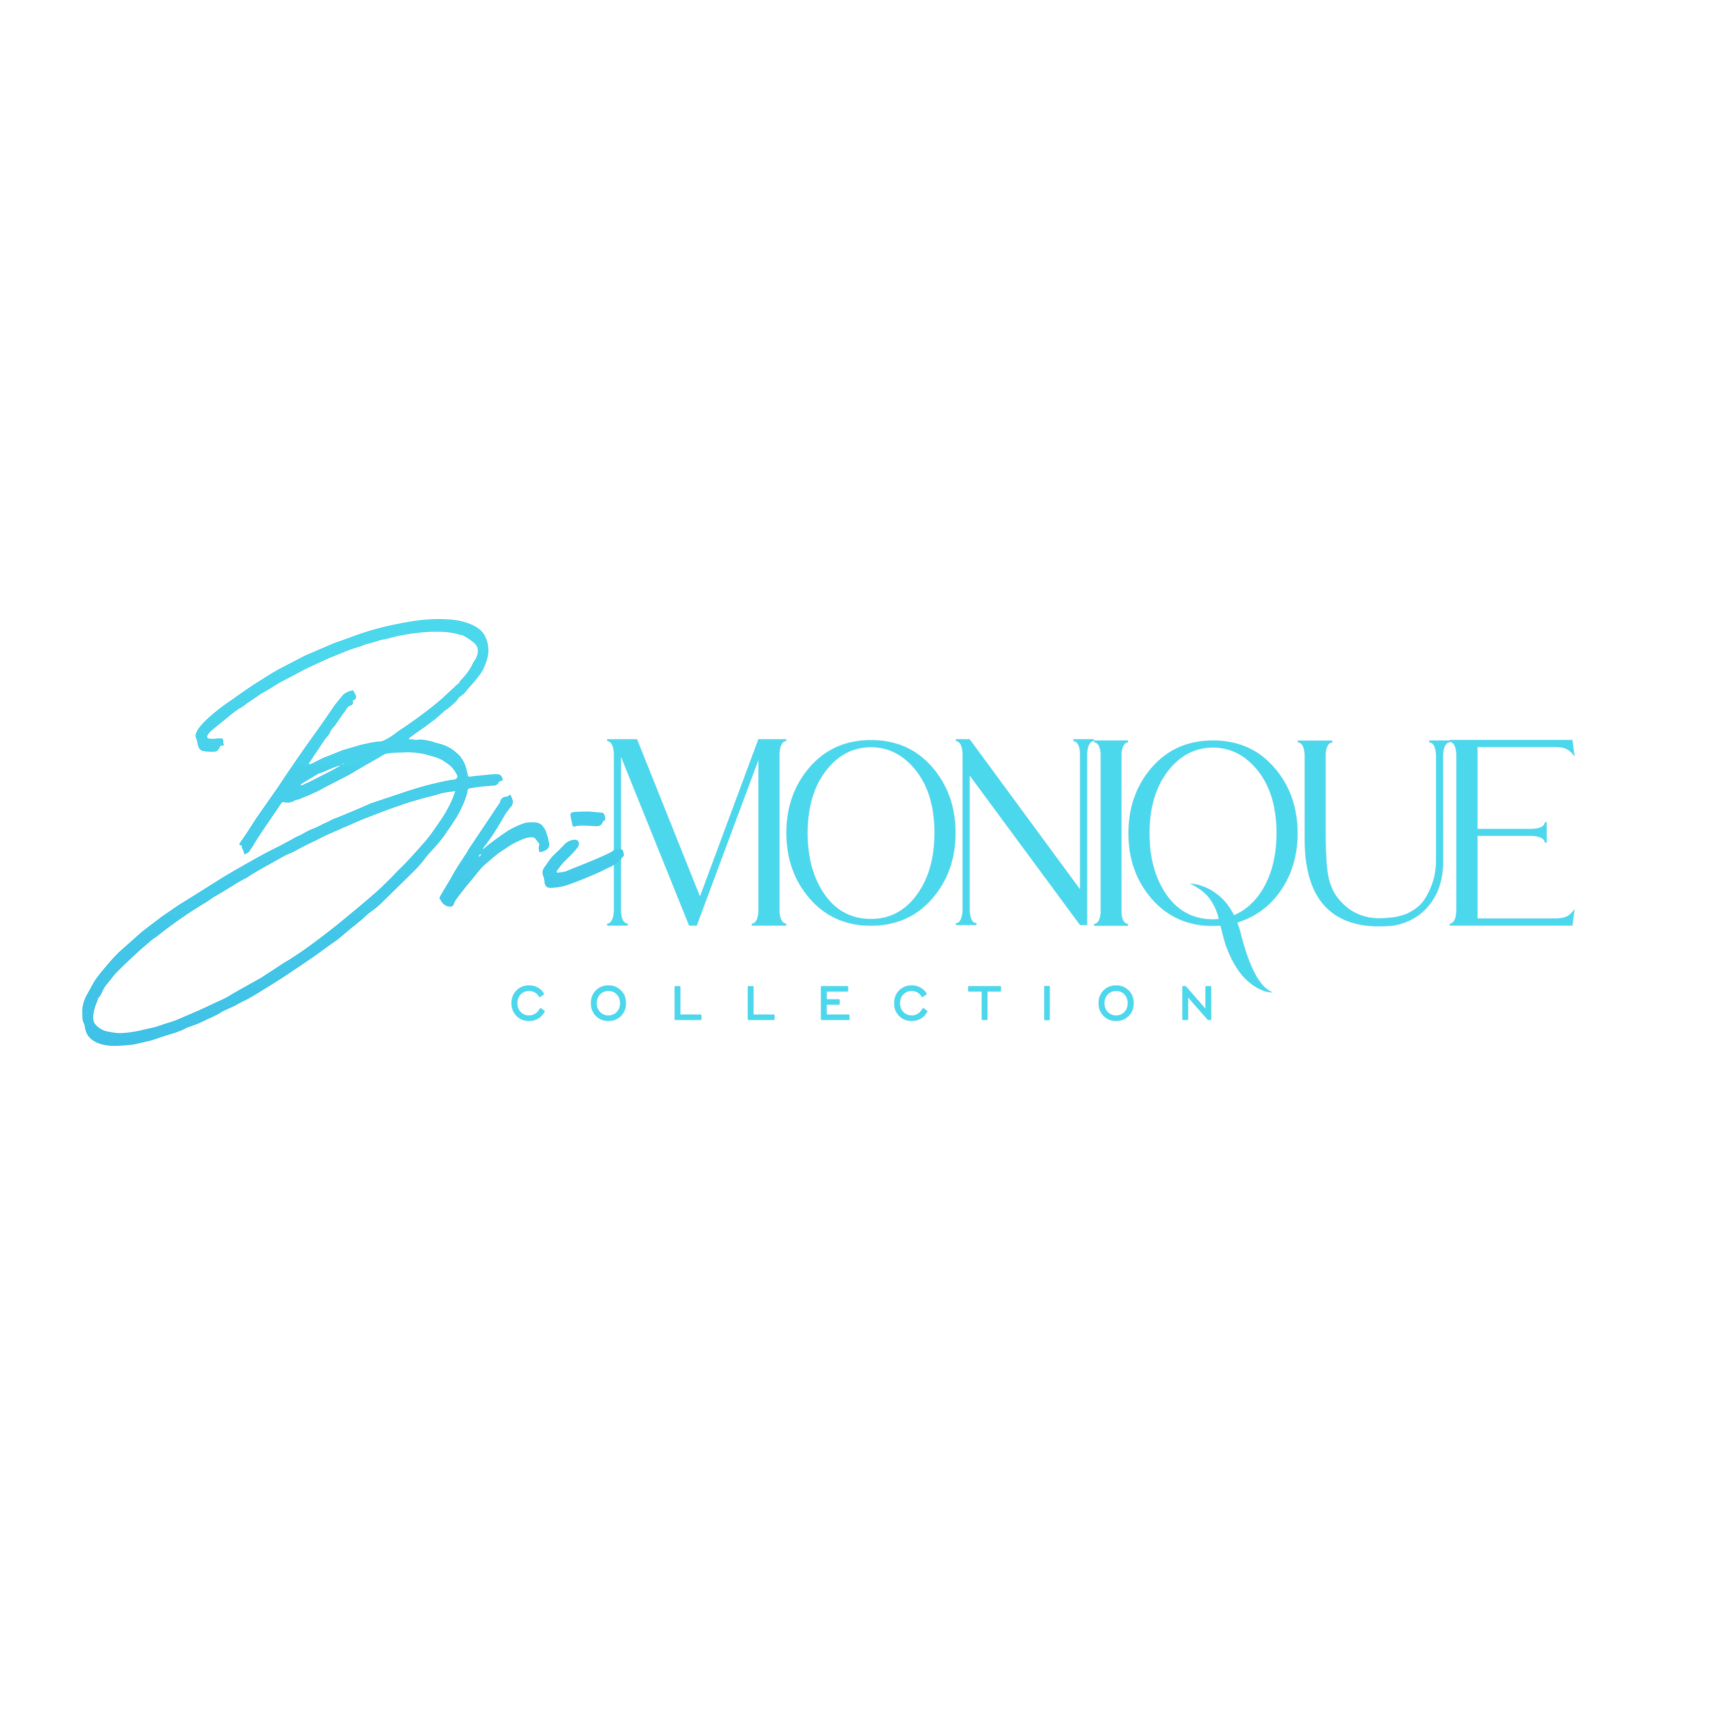 Bri Monique Collection